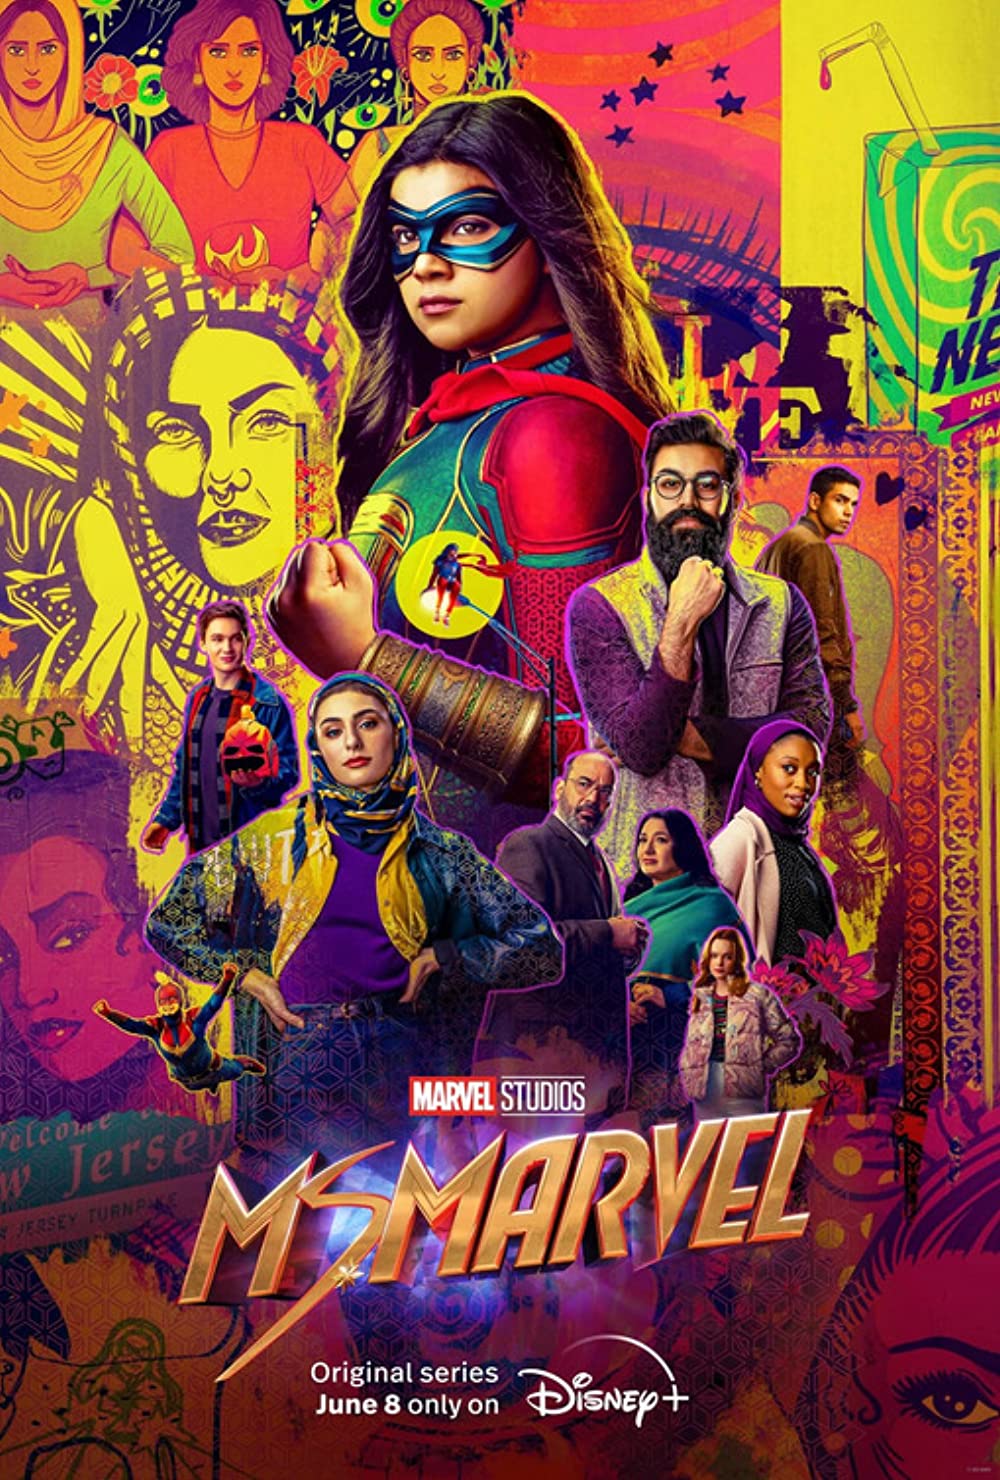 Captain Marvel Digital Art 2018 Wallpapers